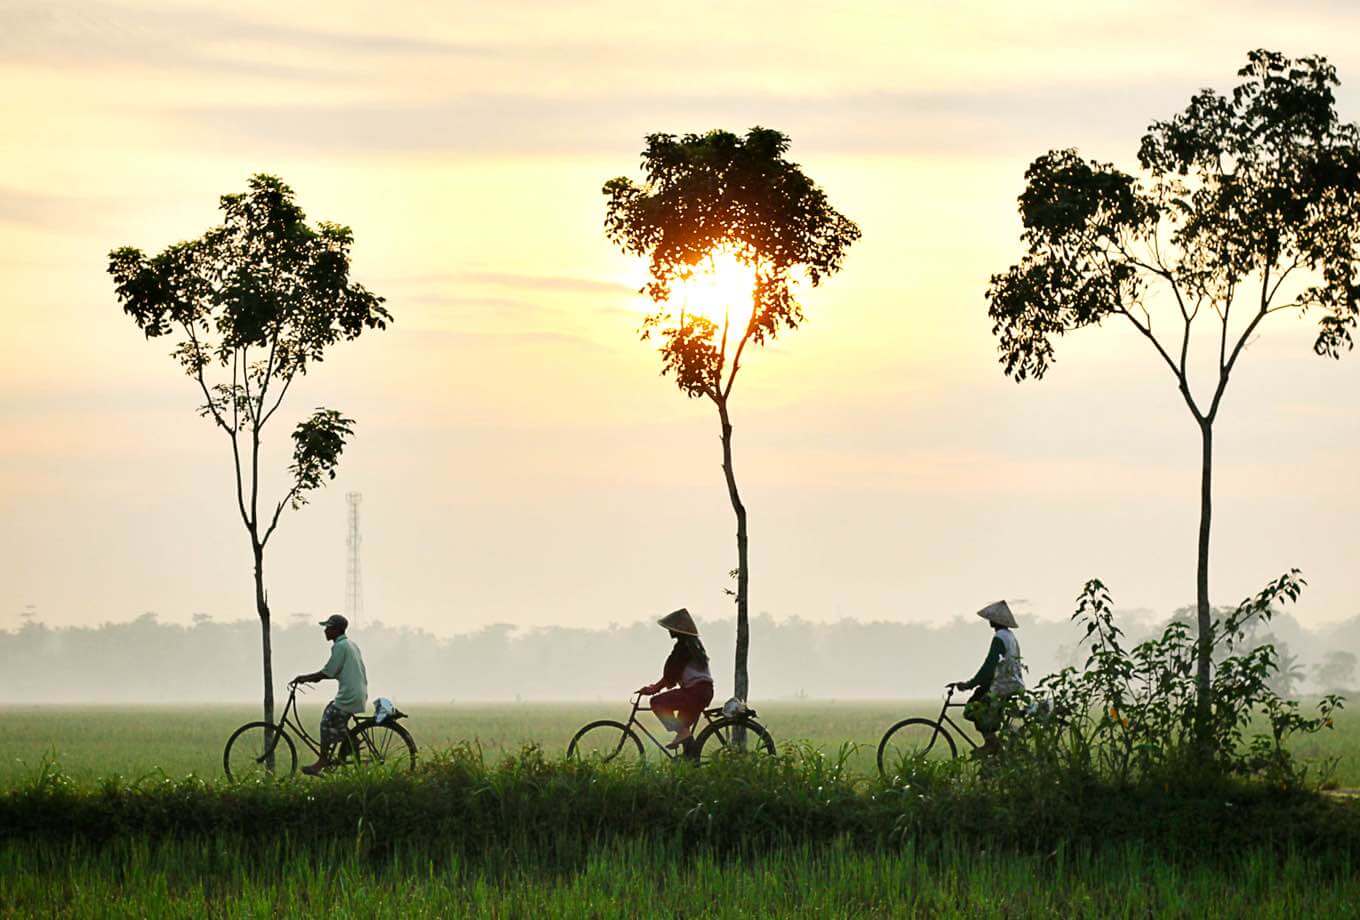 Three villagers riding bikes through a green ricefield